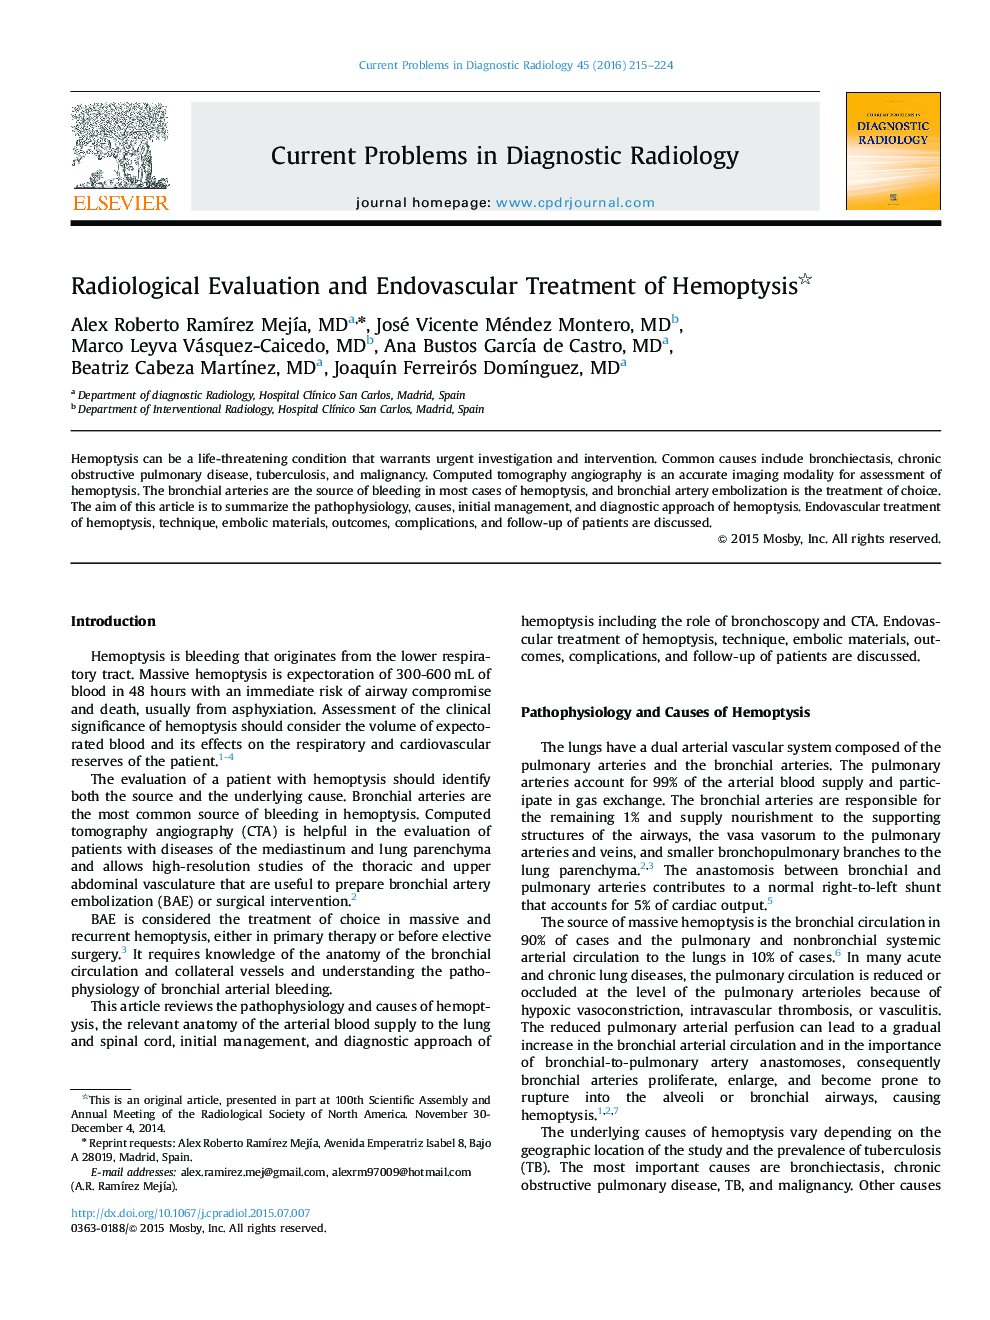 Radiological Evaluation and Endovascular Treatment of Hemoptysis 